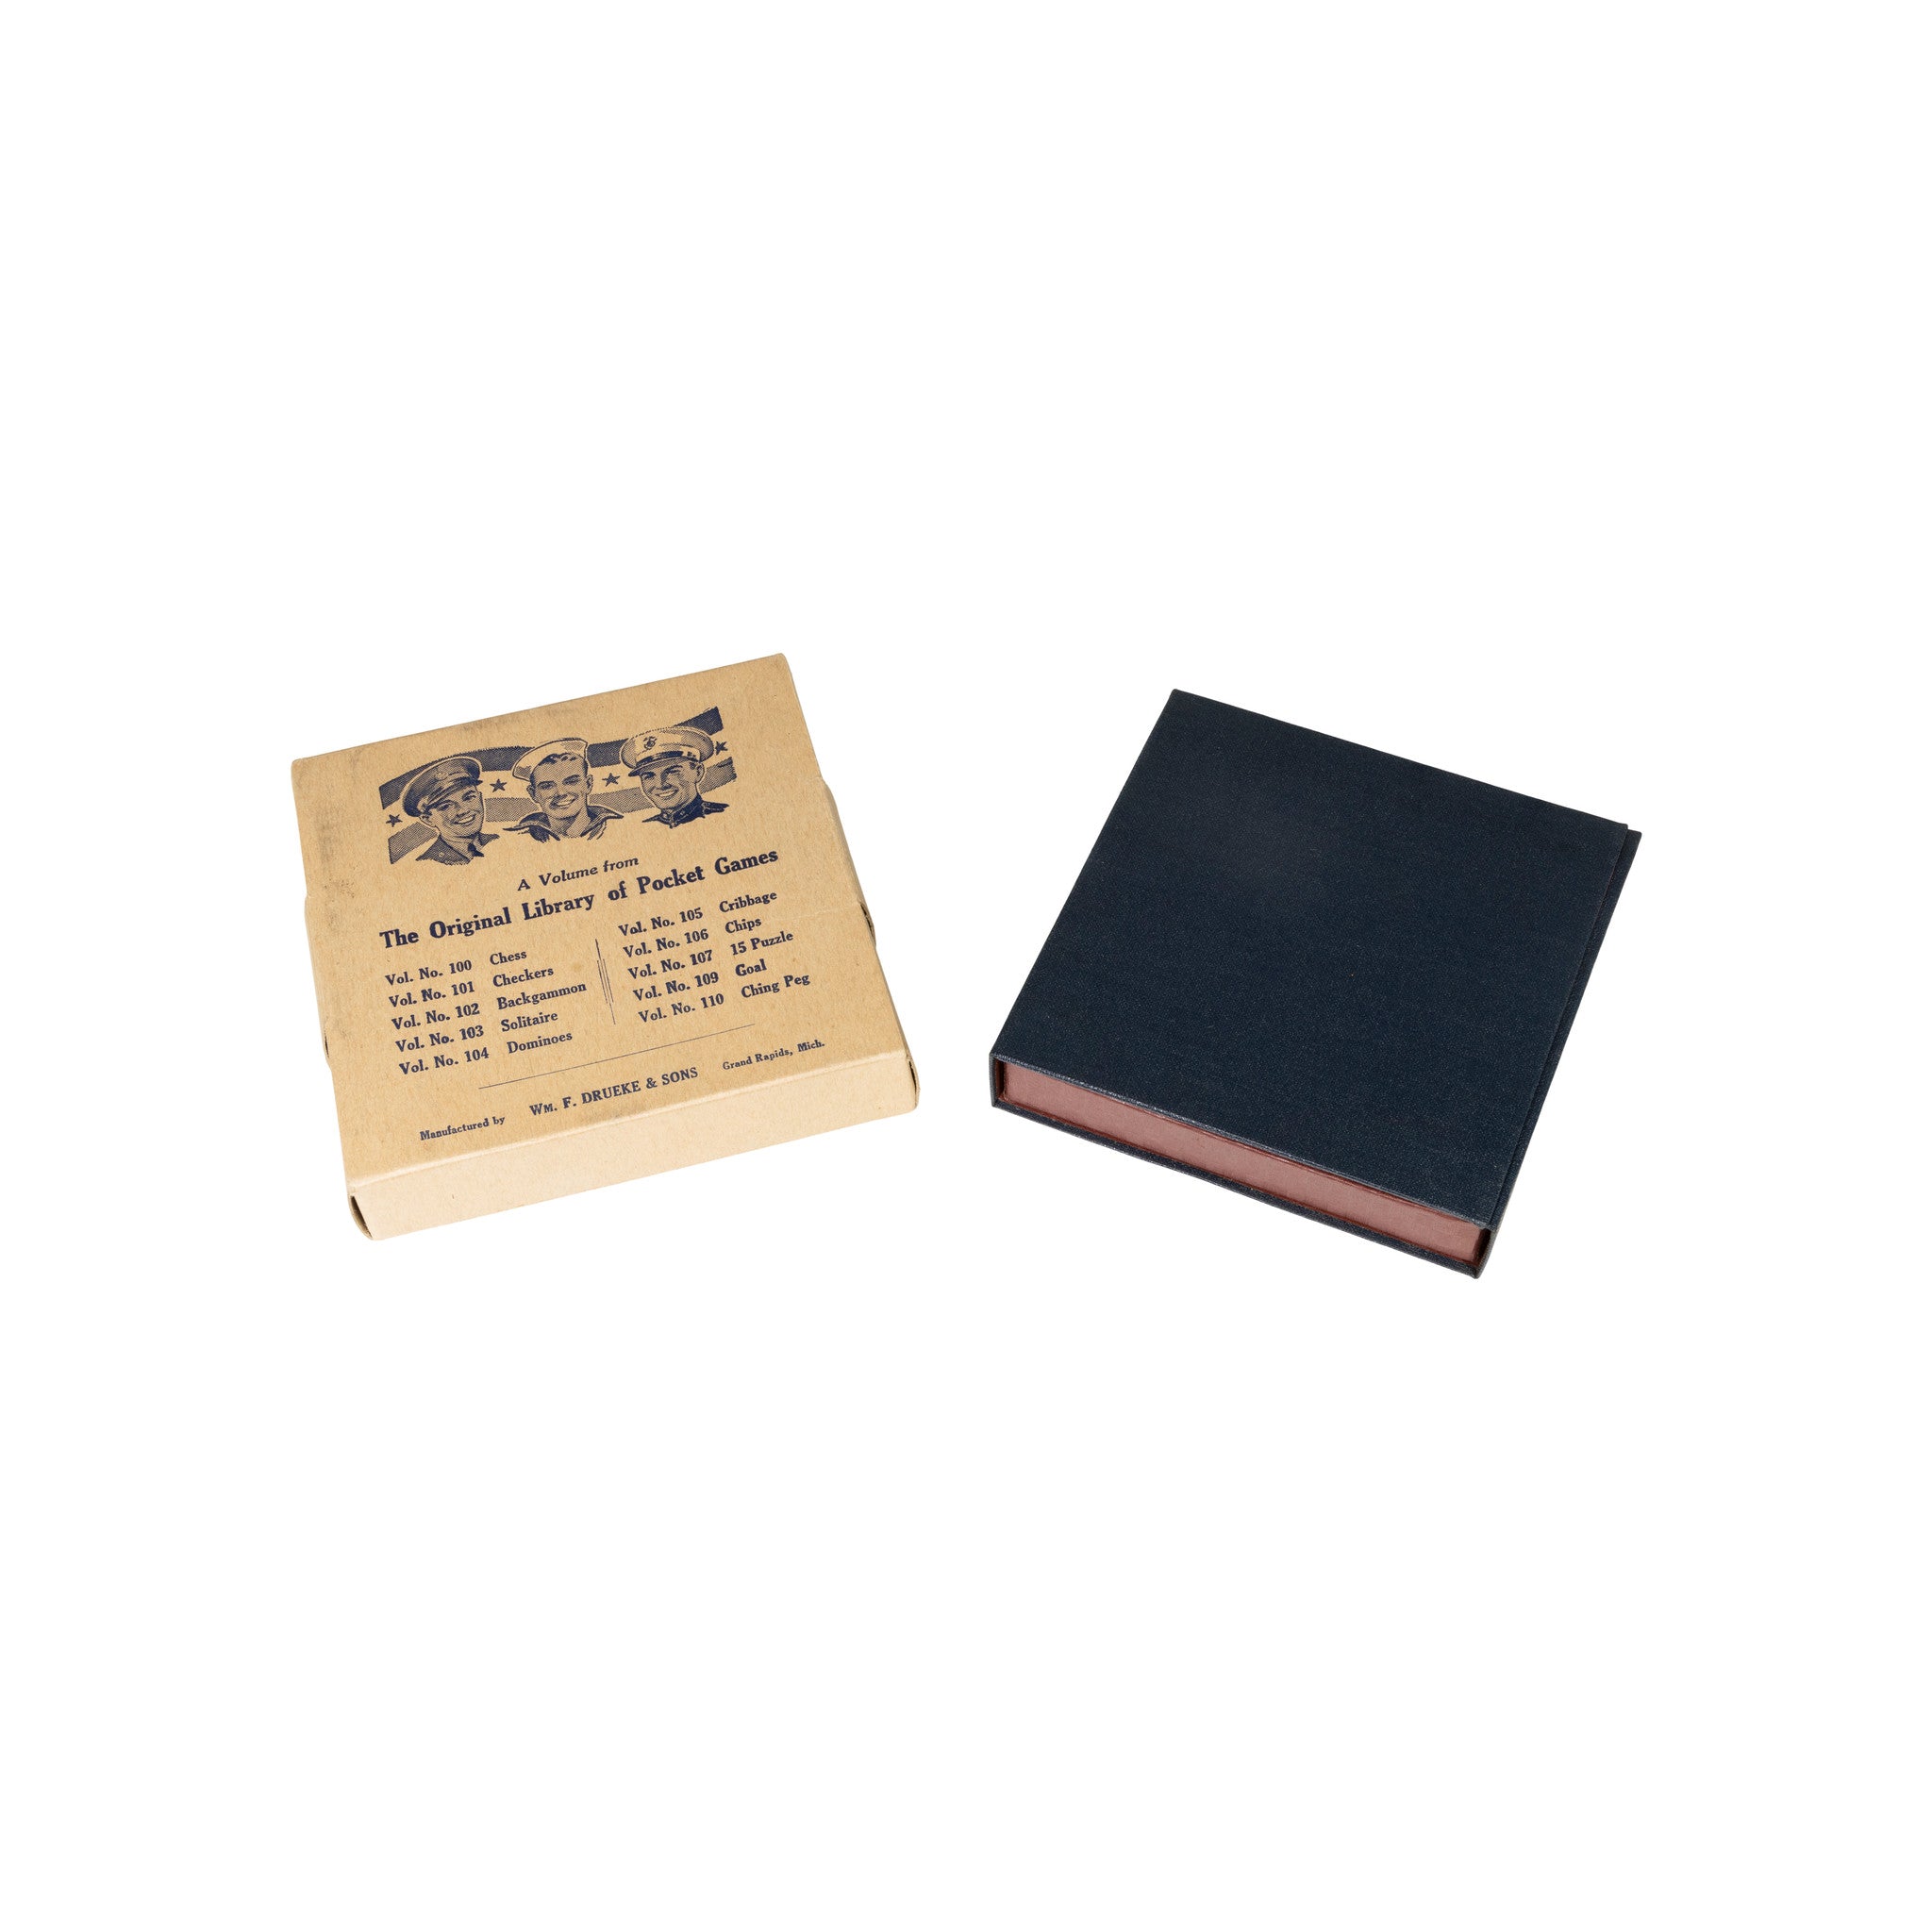 W. F. Drueke & Sons Pocket Cribbage Board